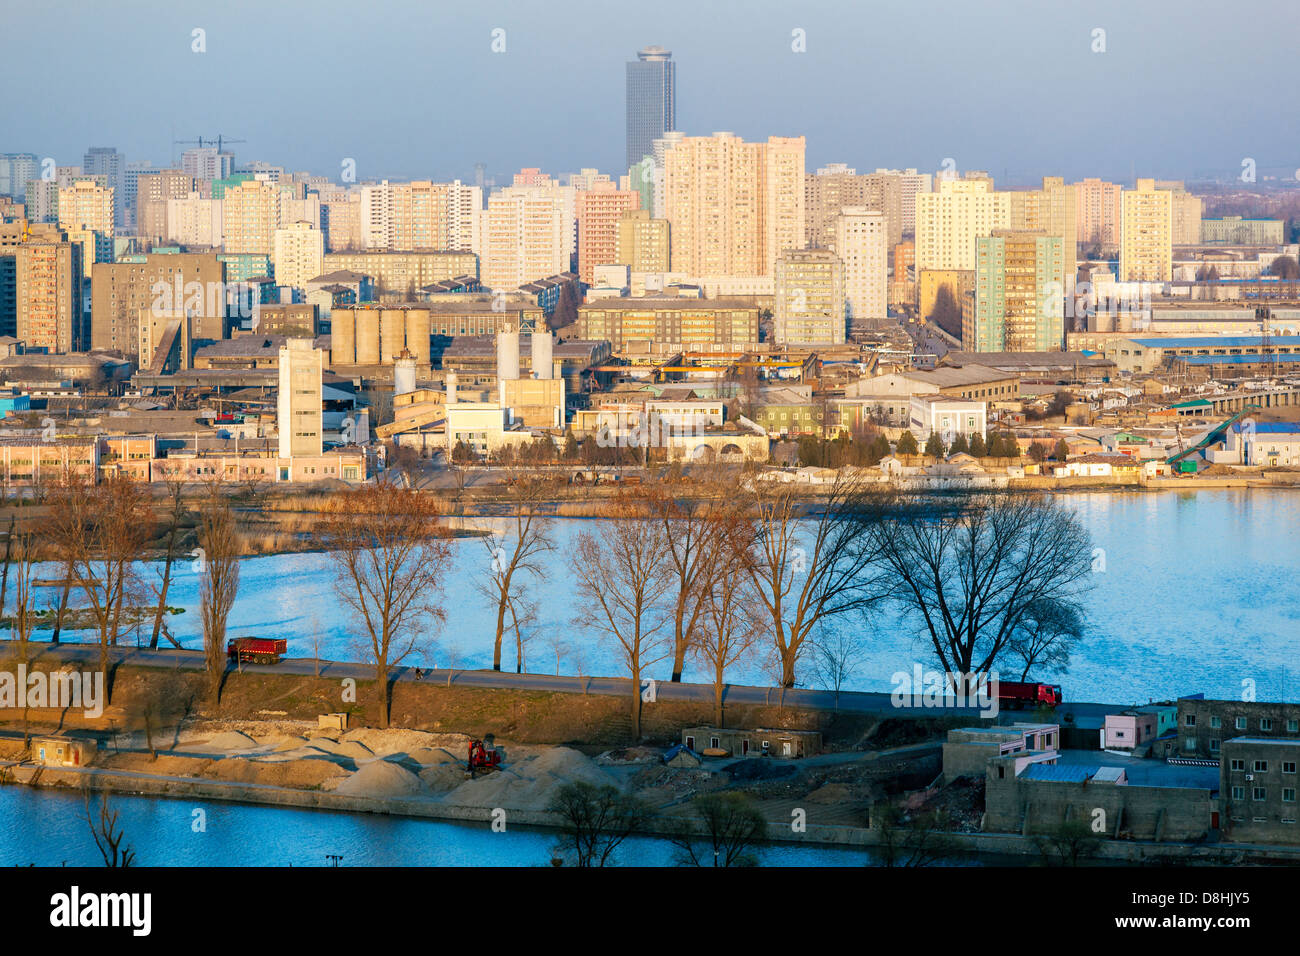 Democratic Peoples's Republic of Korea (DPRK), North Korea, Pyongyang, elevated view over the city skyline Stock Photo